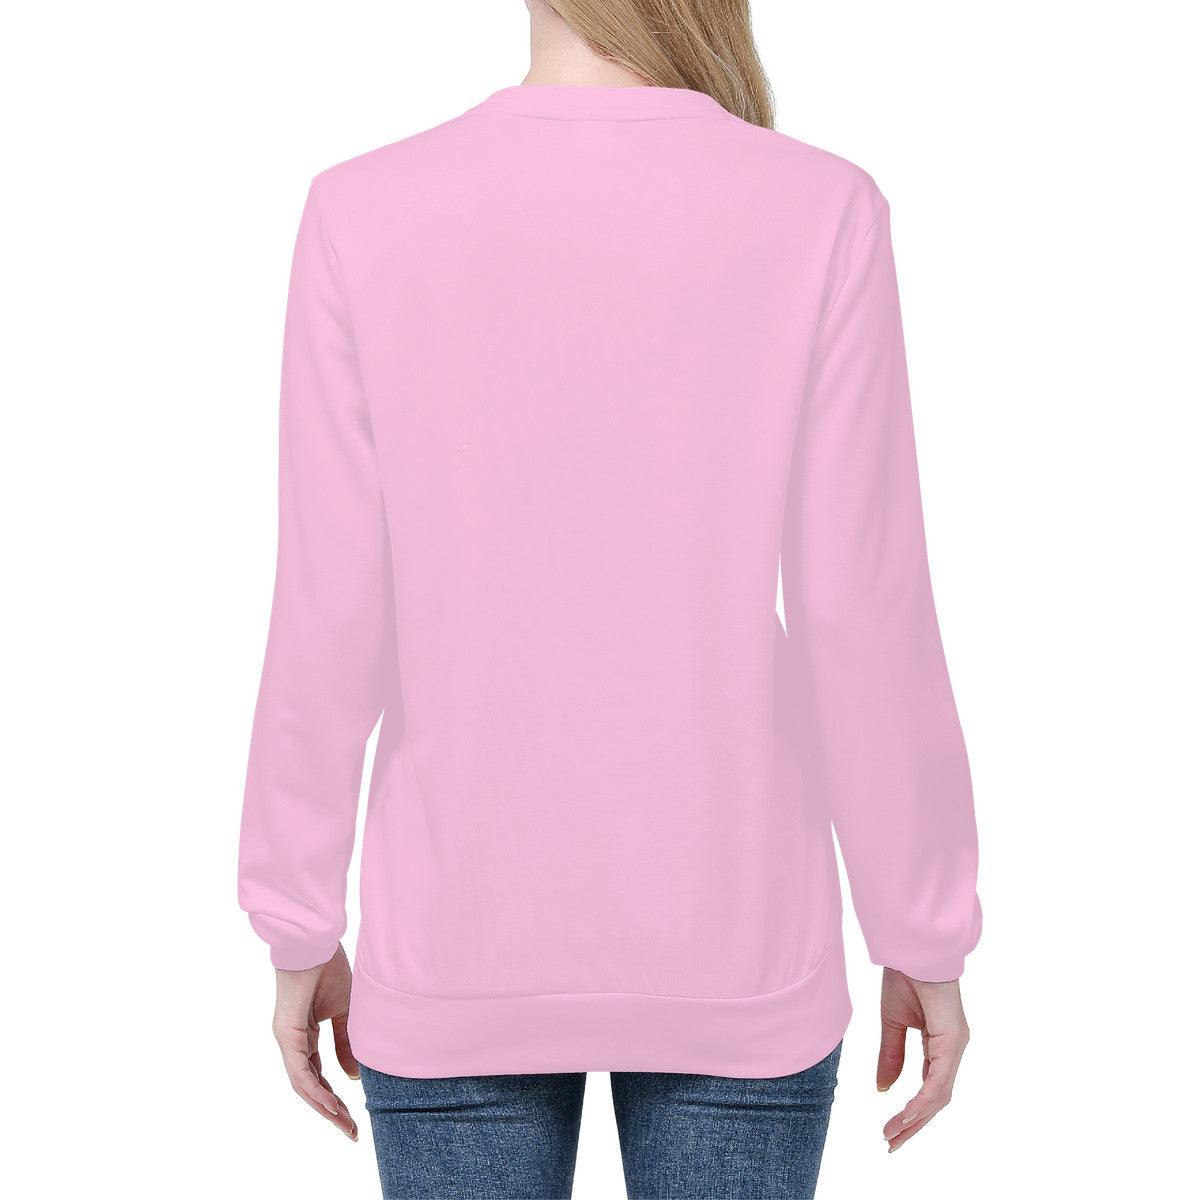 Pink Cooky Sweater  | BTS BT21 Merchandise